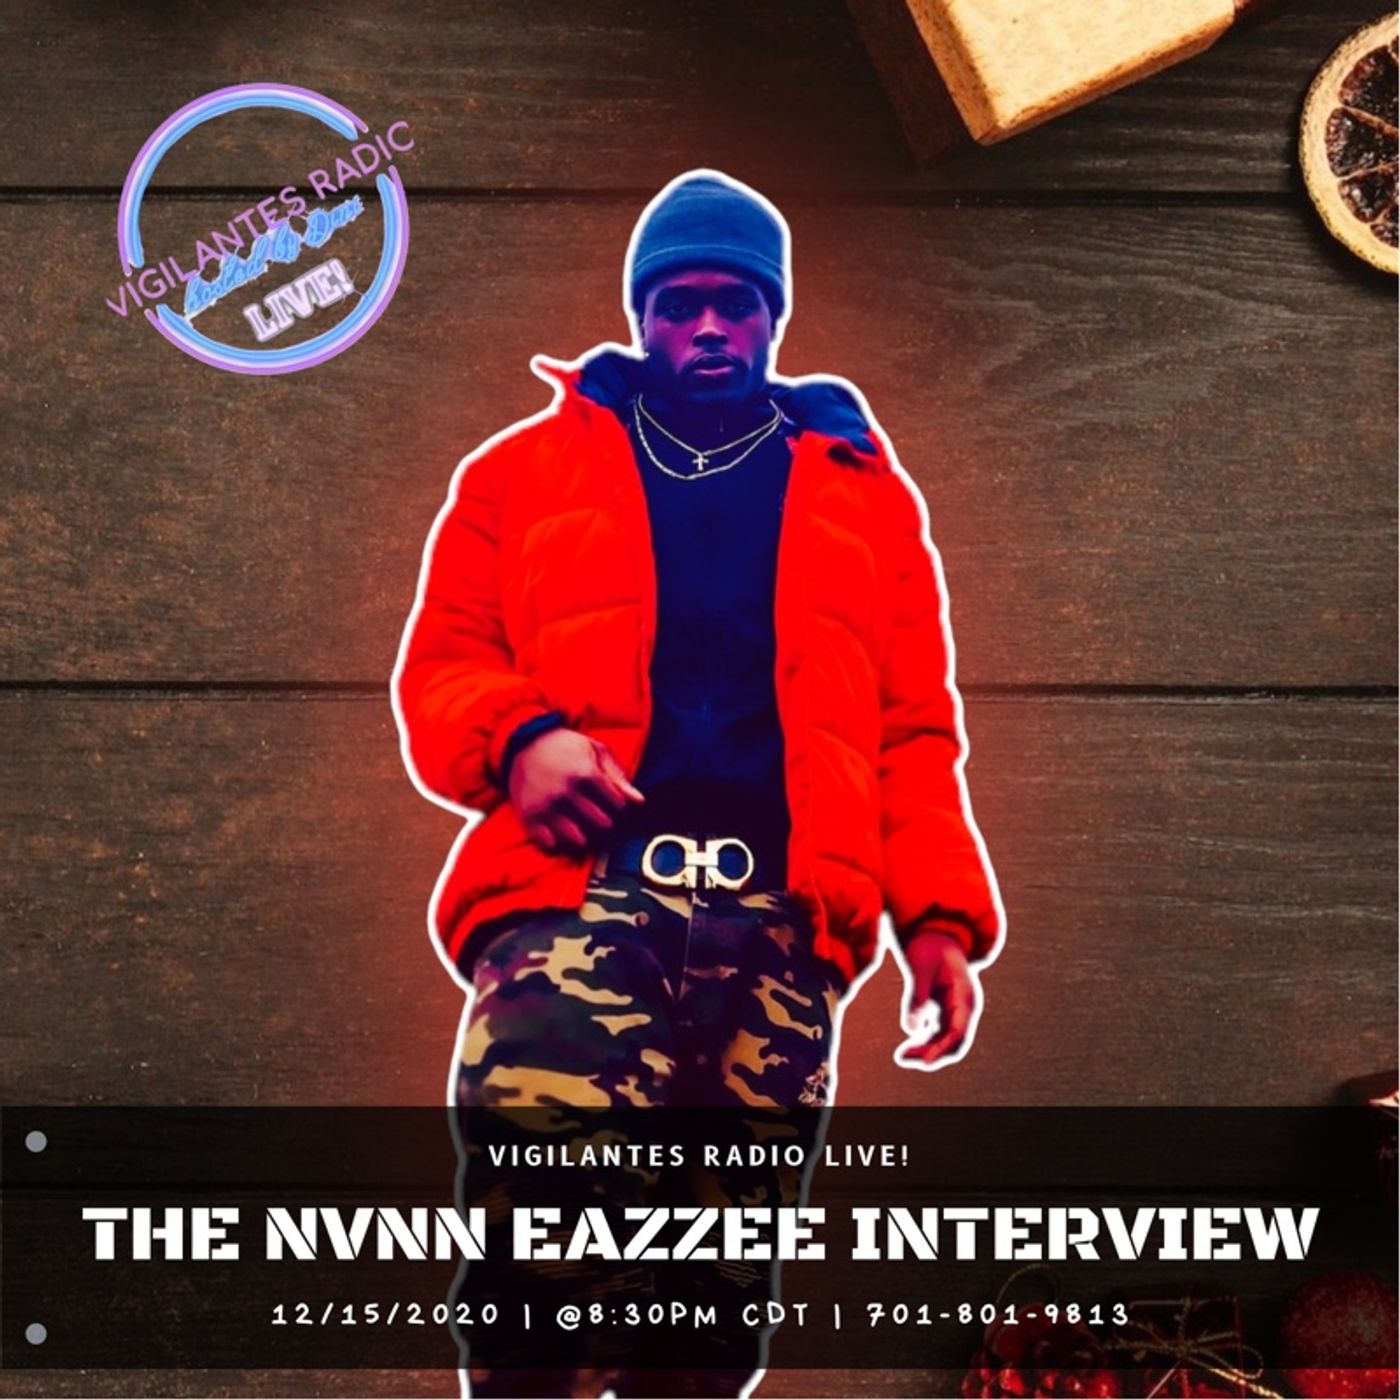 The NVNN Eazzee Interview. Image